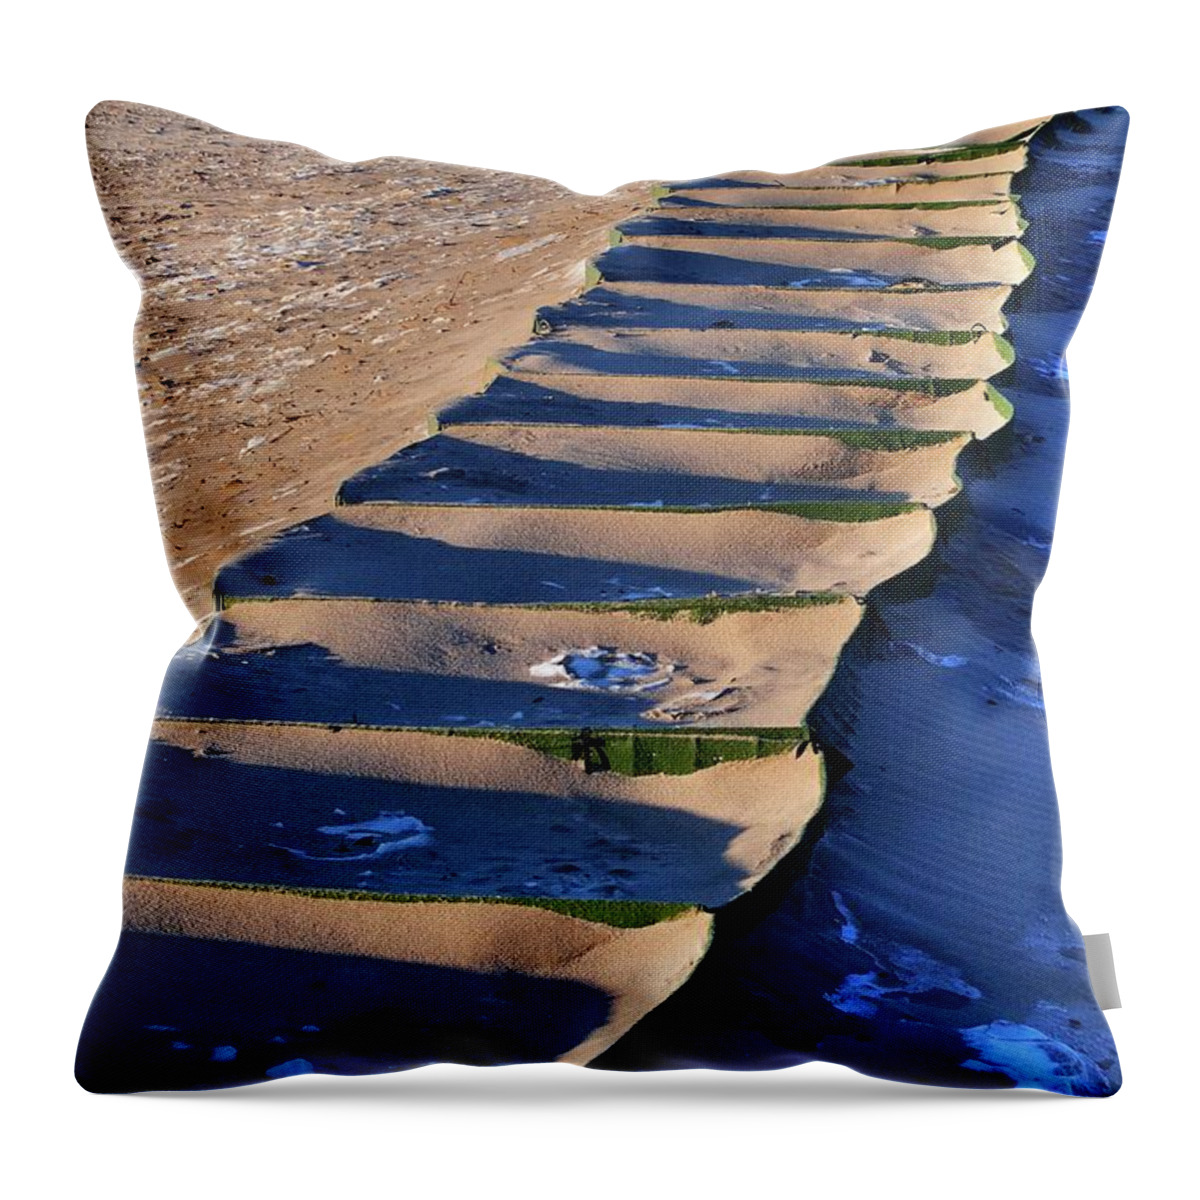 Sand Throw Pillow featuring the photograph Sandbags by Randy Pollard